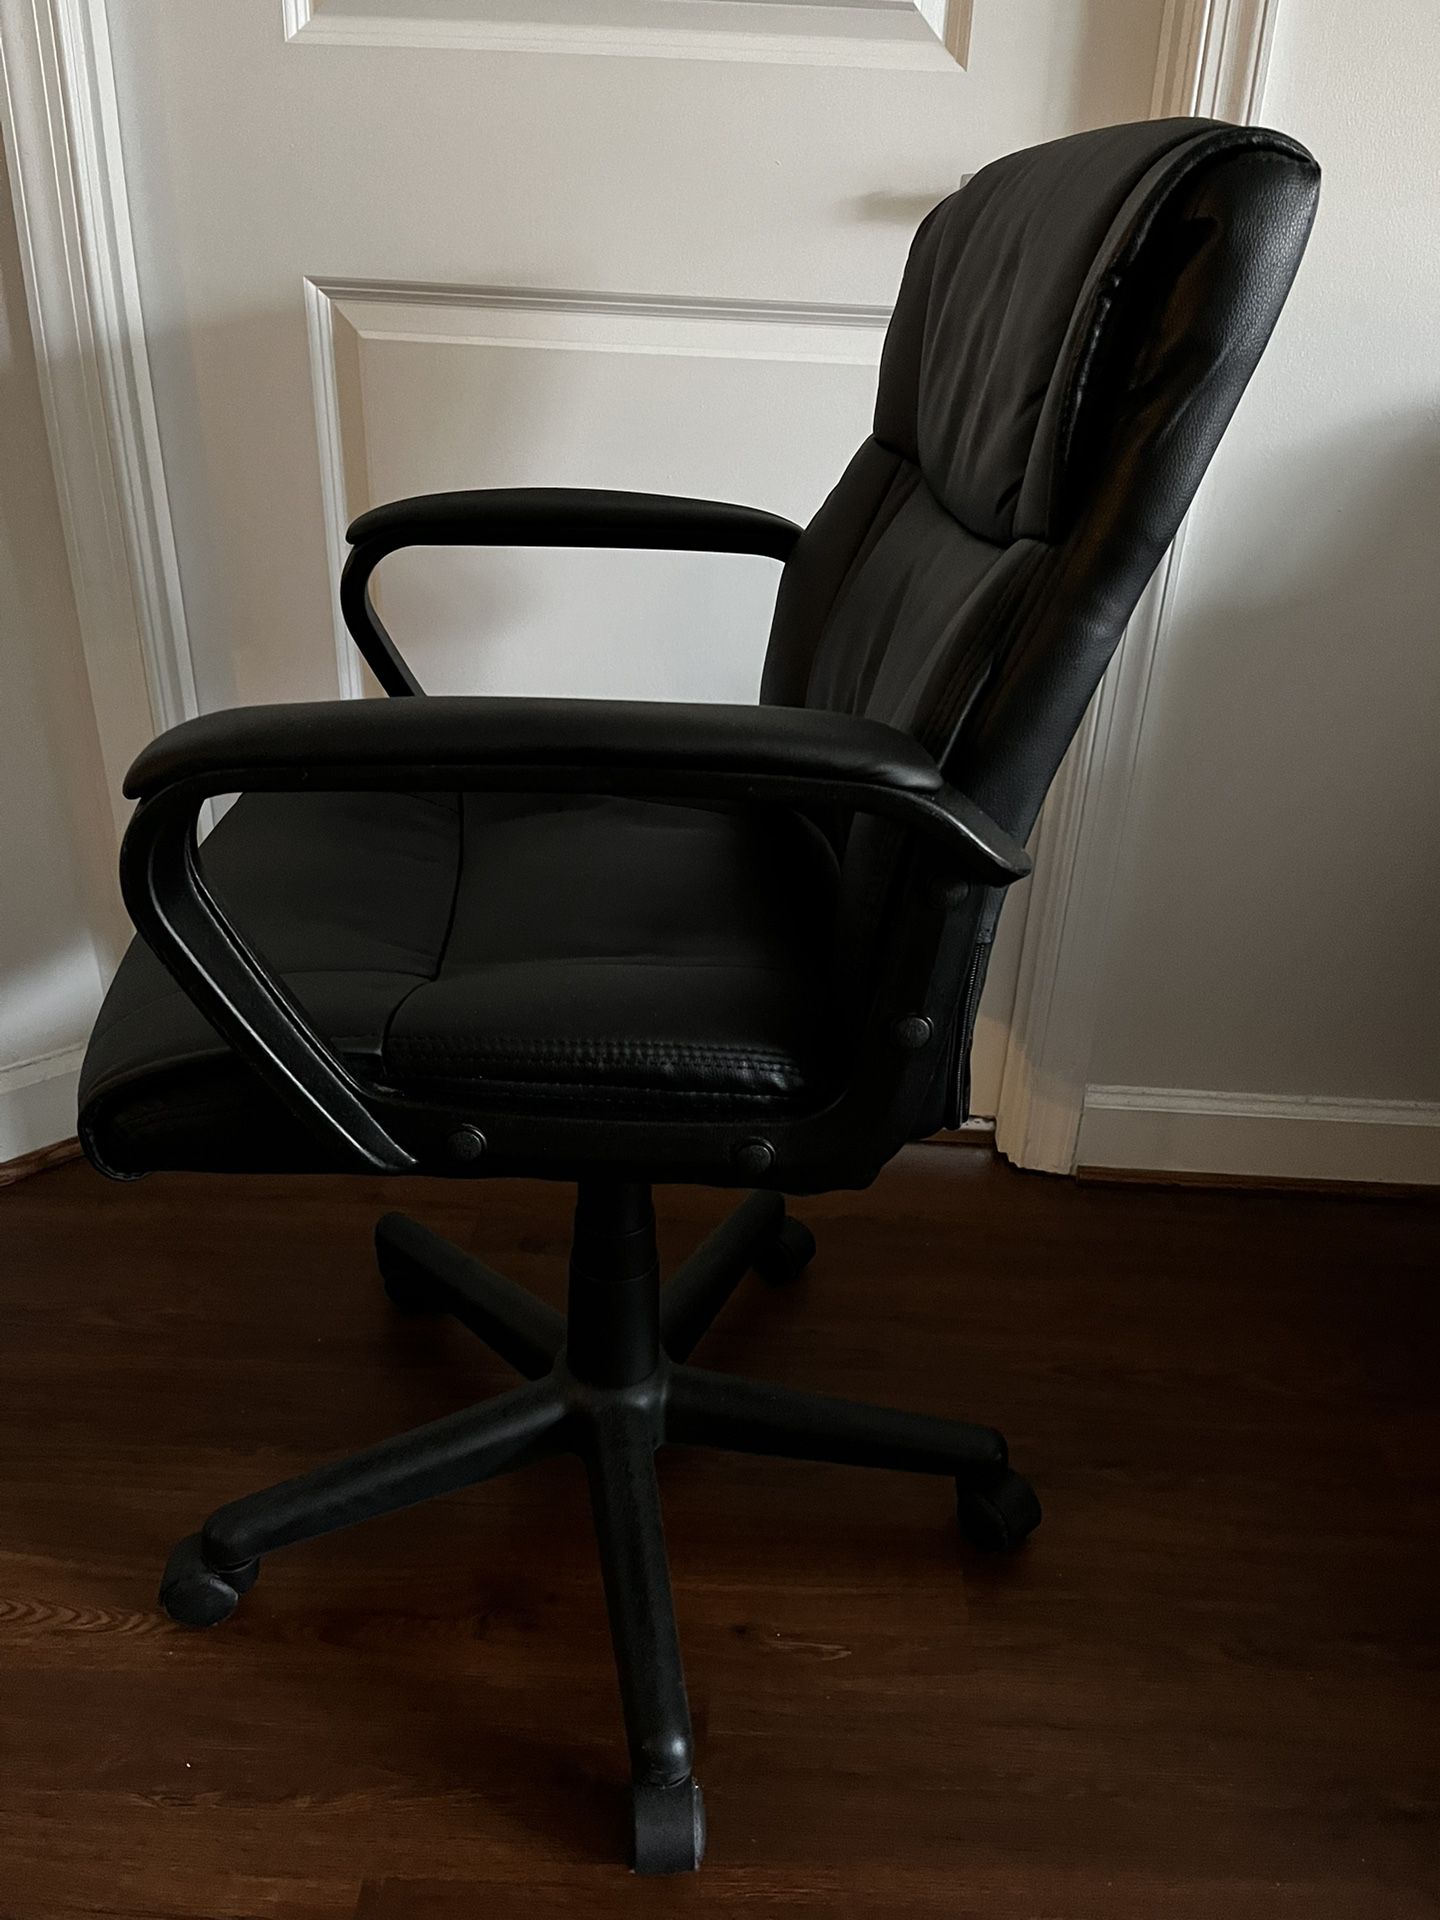 Black office desk chair